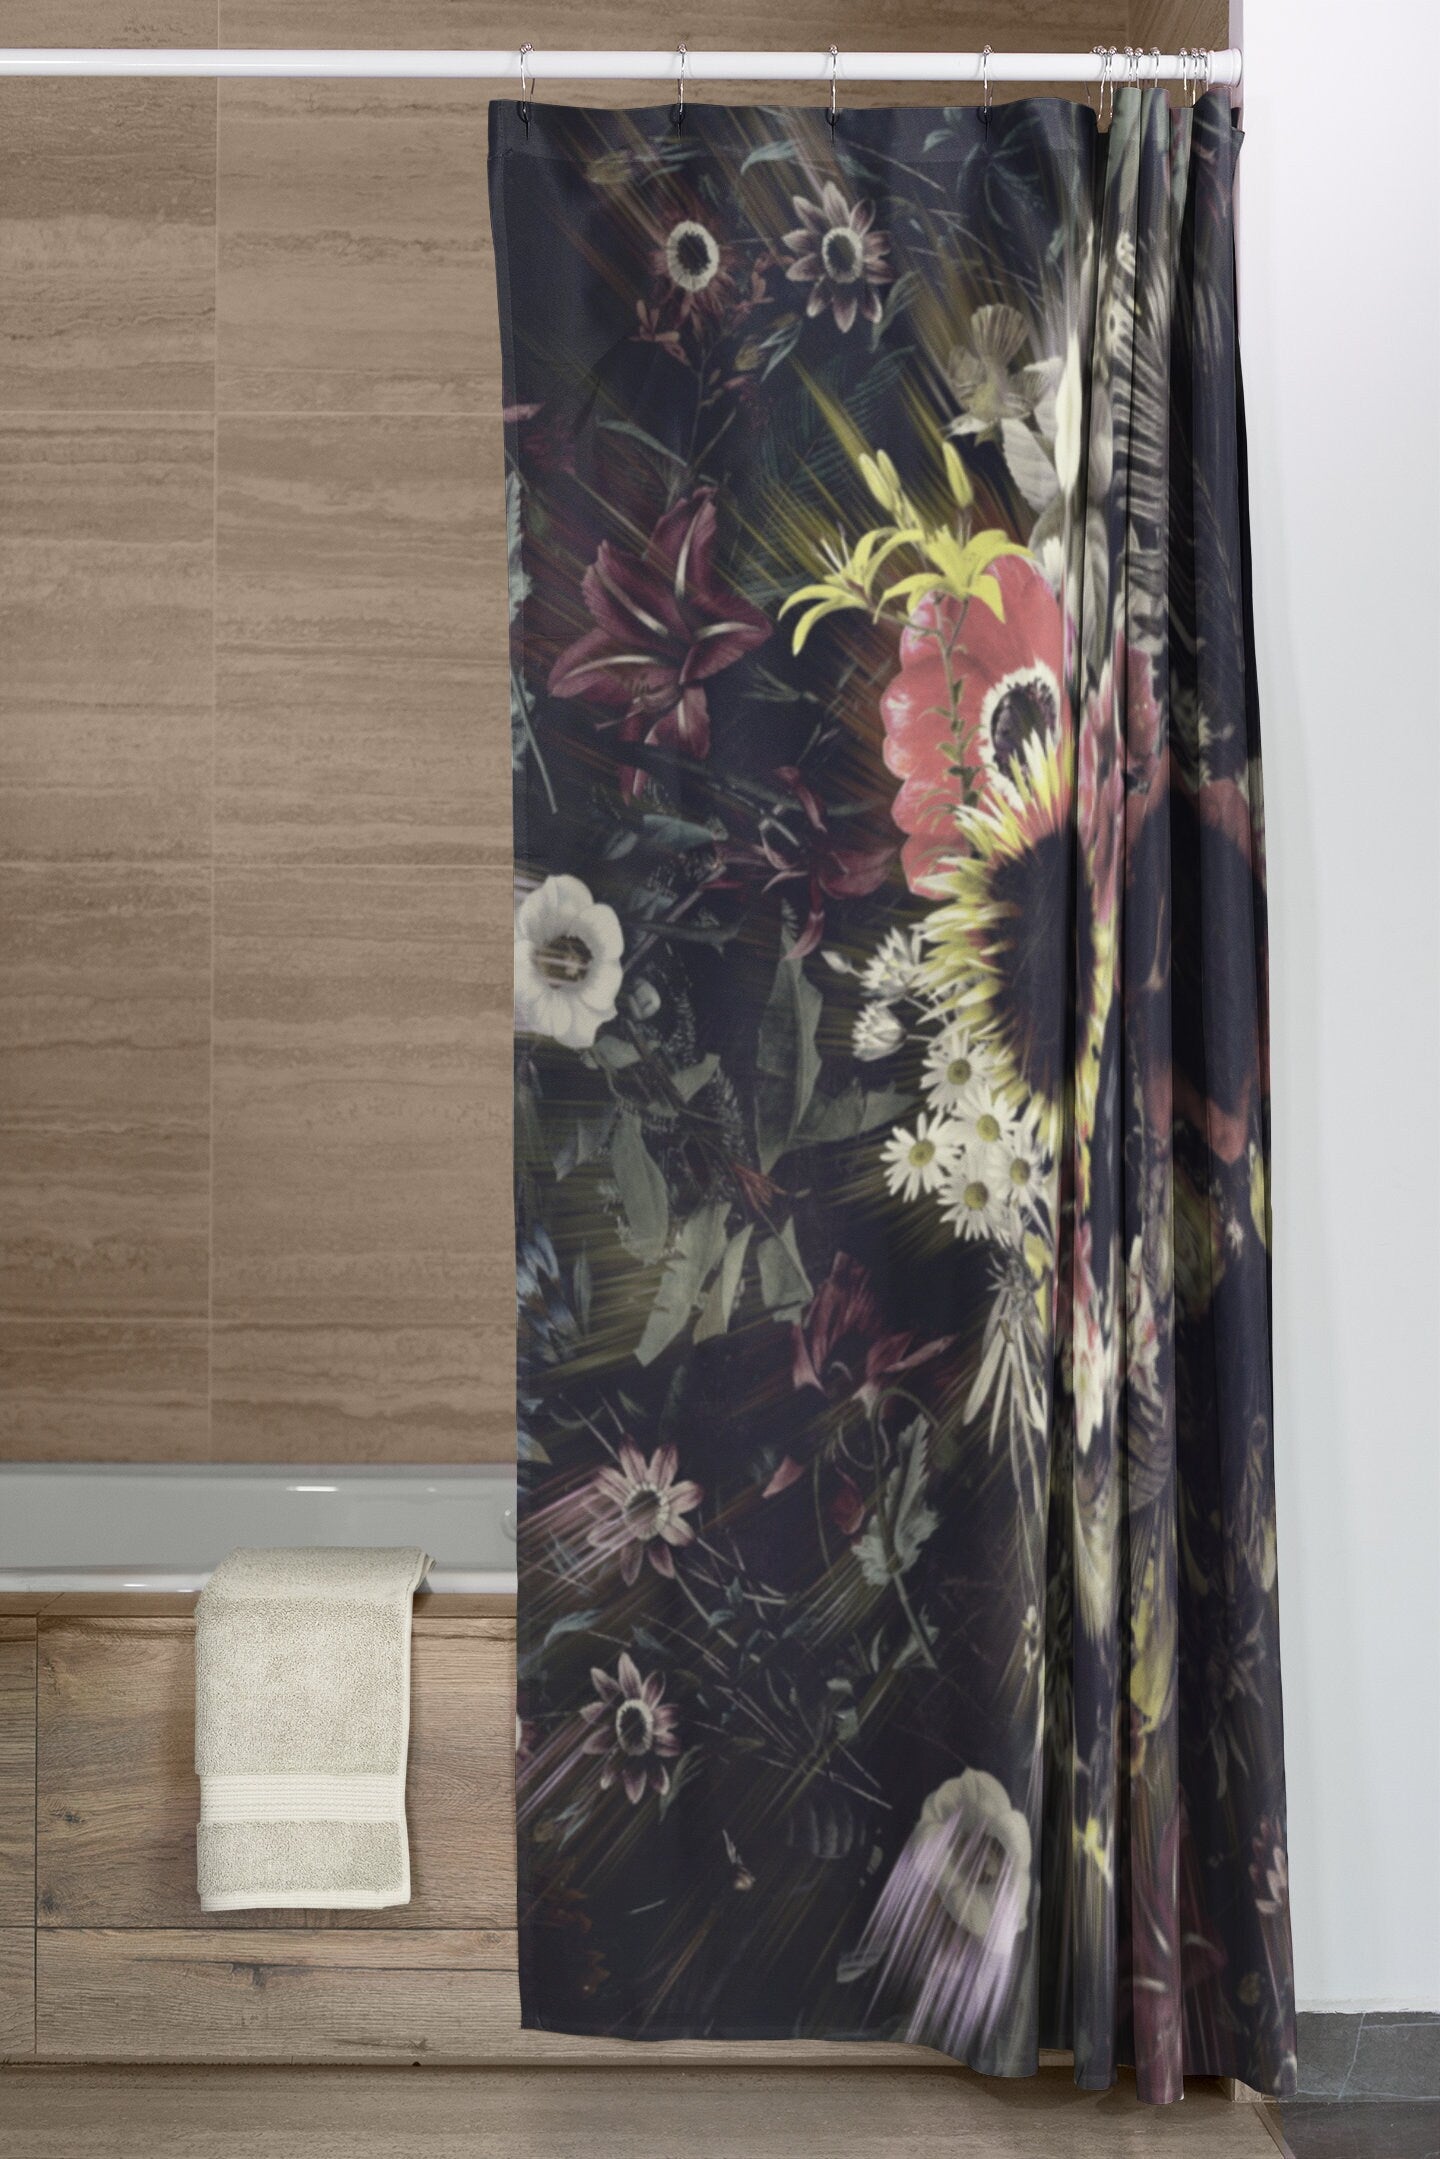 Skull Shower Curtain, Floral Shower Curtain Decor, Gothic Shower Curtain Home Decor, Sugar Skull Print Modern Bathroom Decor